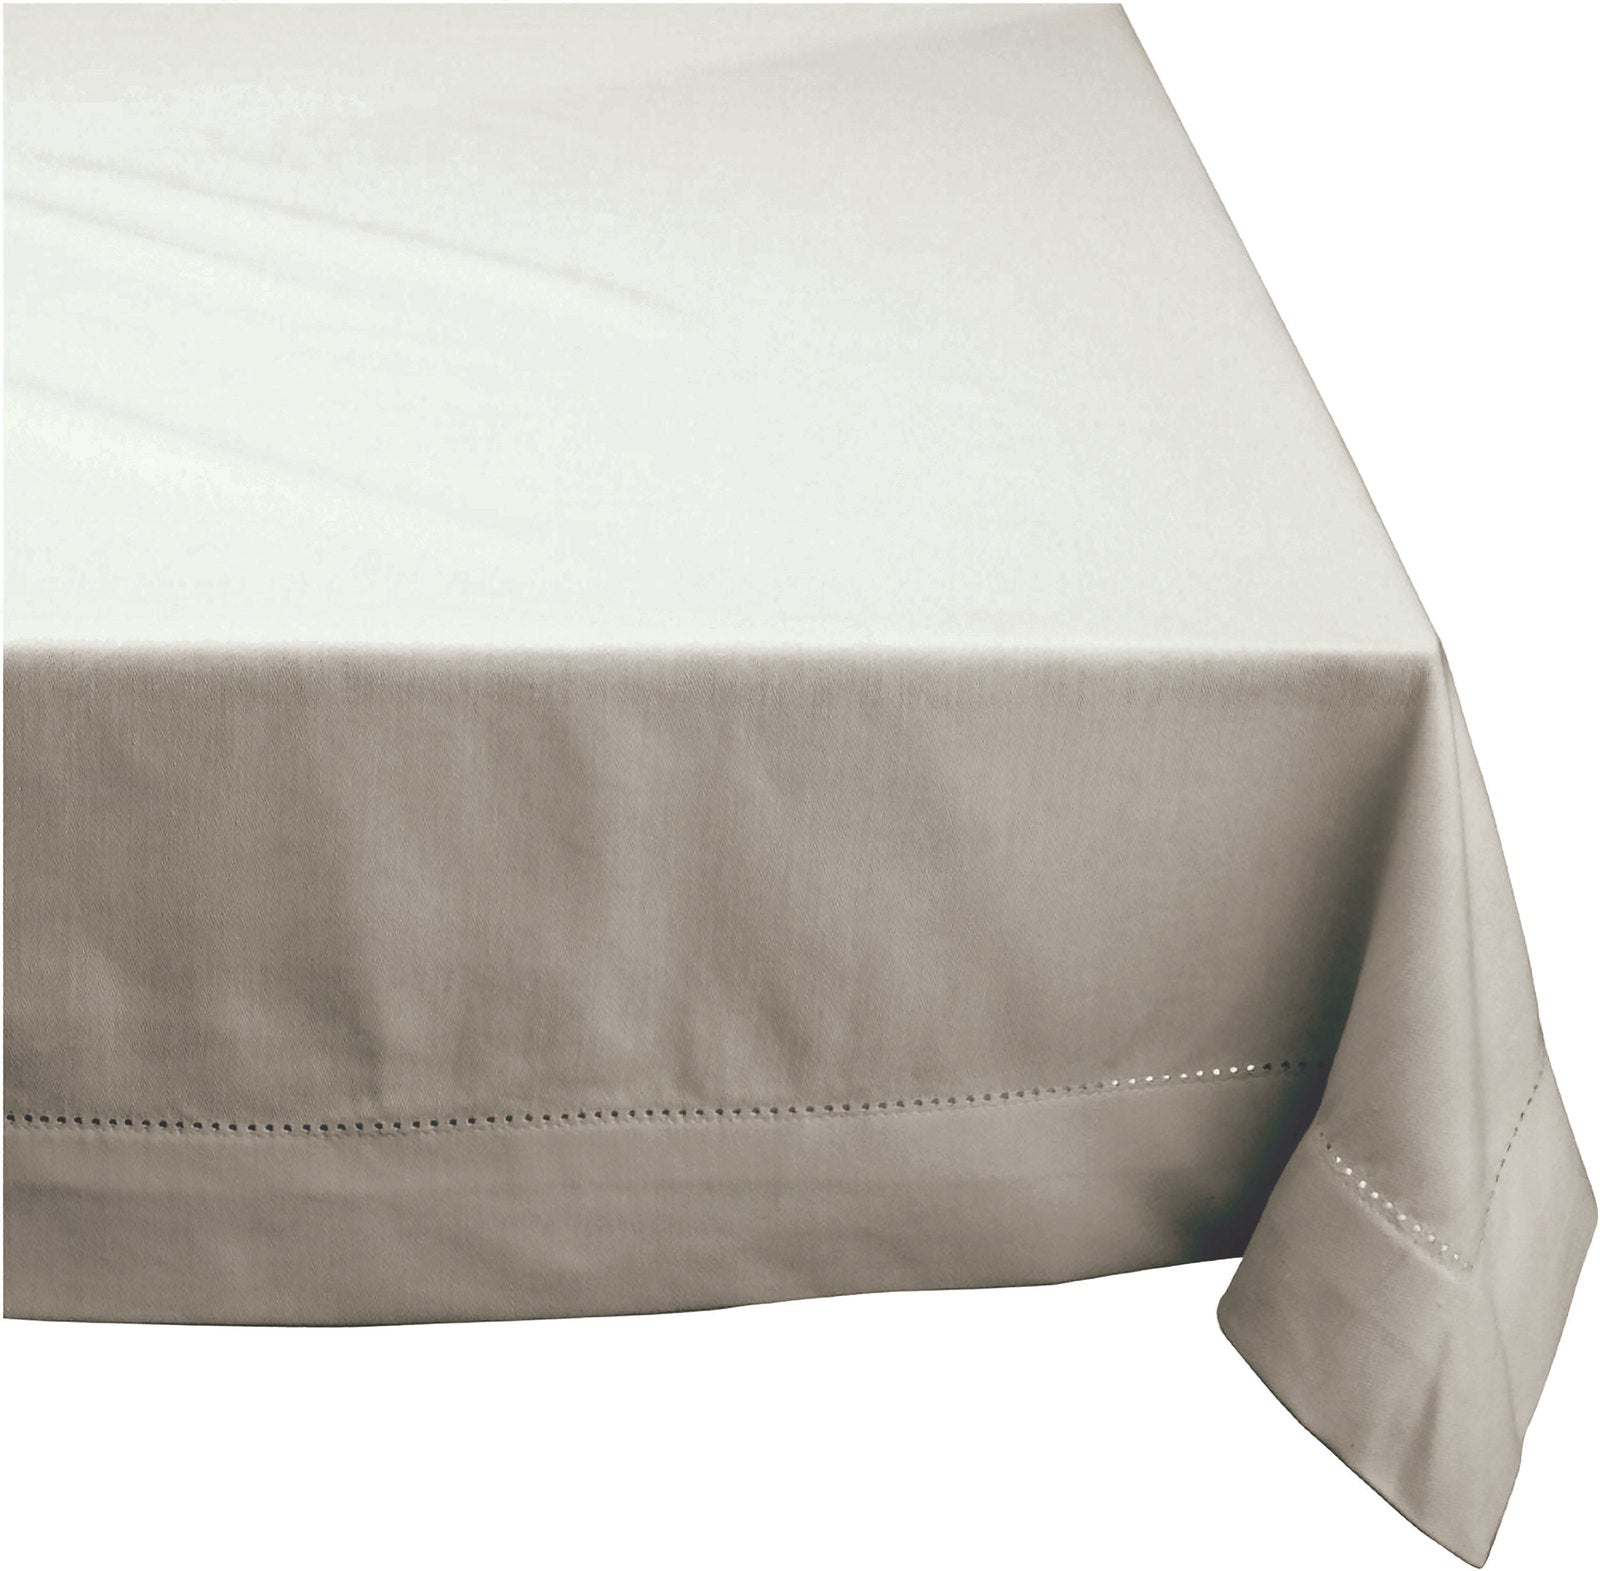 Elegant Hemstitch Tablecloth - 100% Cotton - 150x230cm in Oatmeal